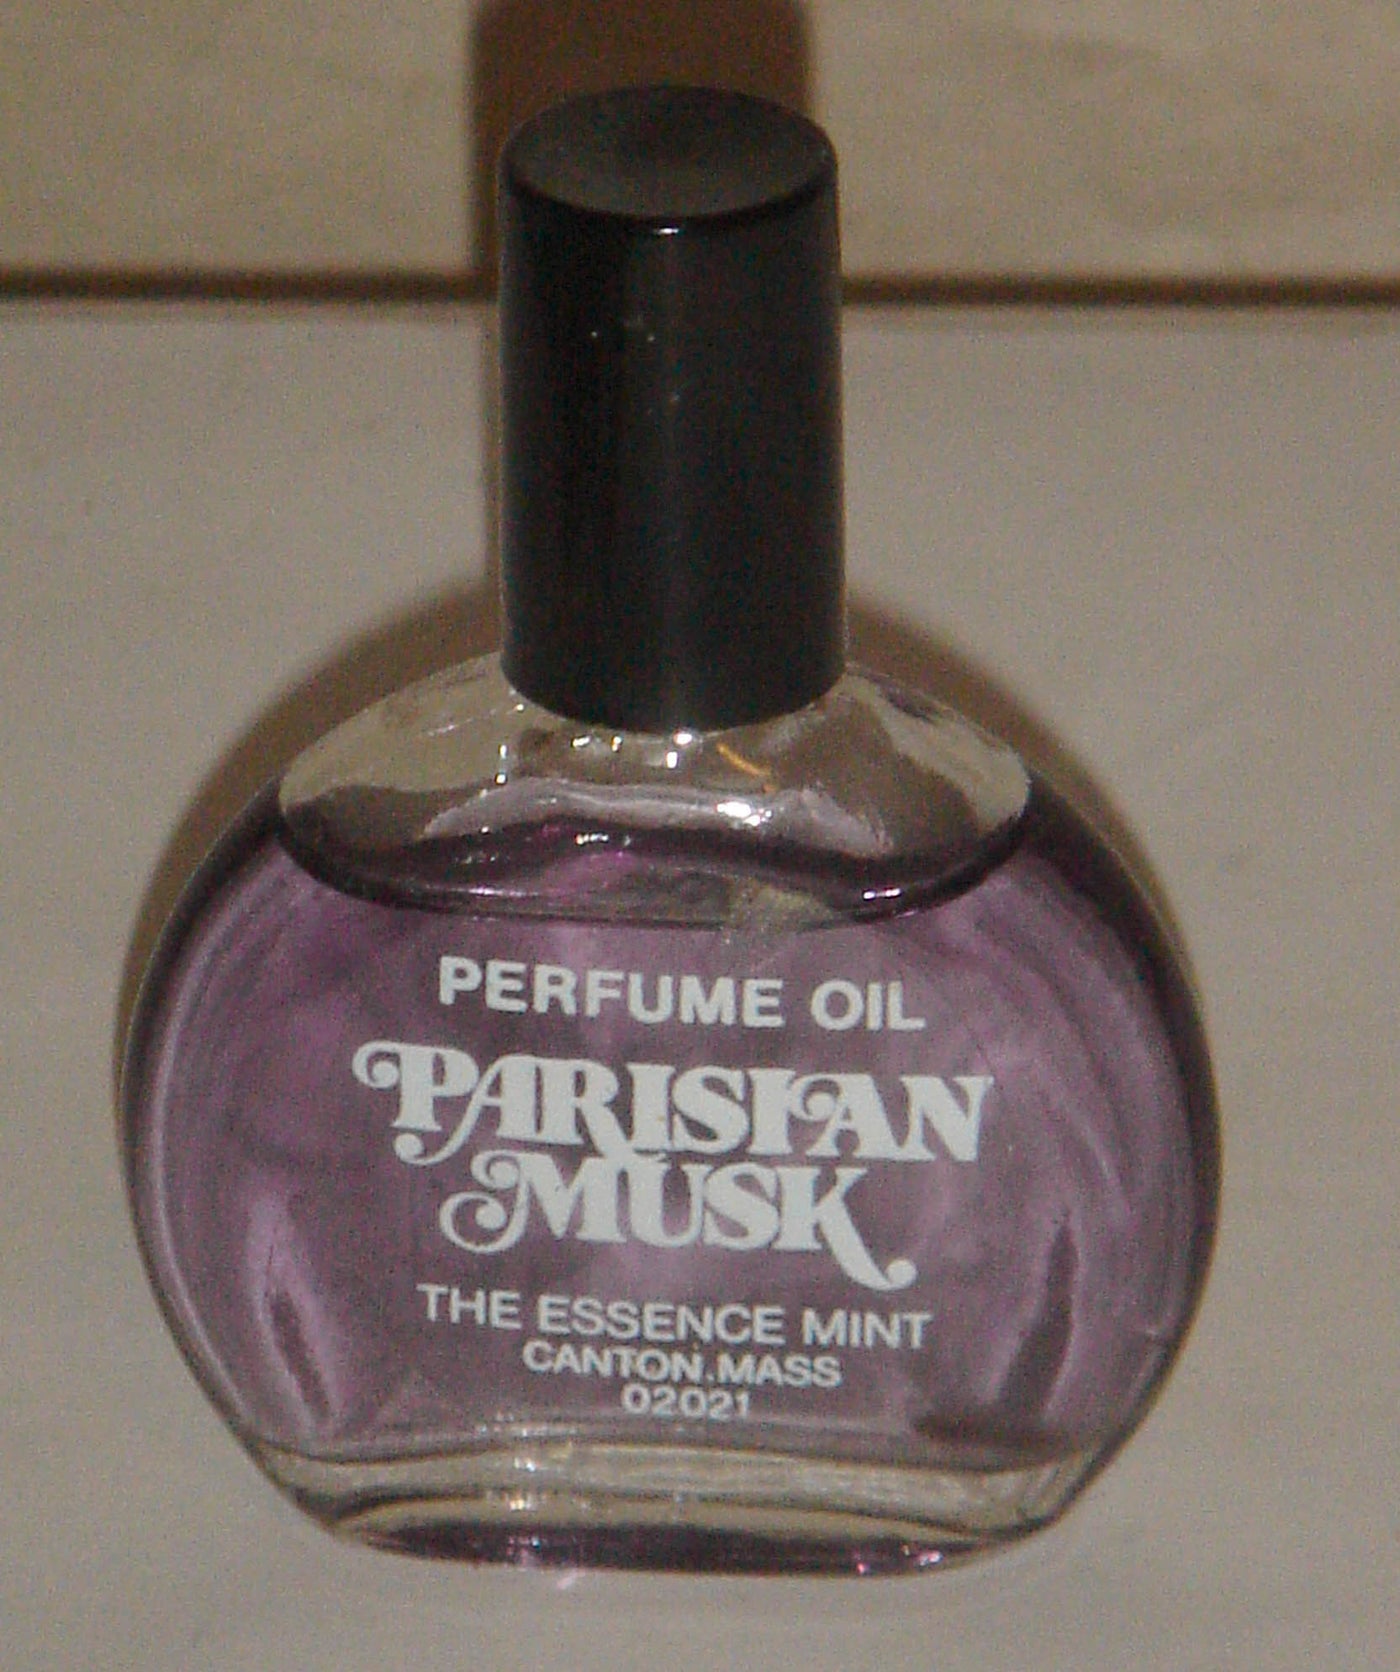 The Essence Mint Parisian Musk Perfume Oil Mini